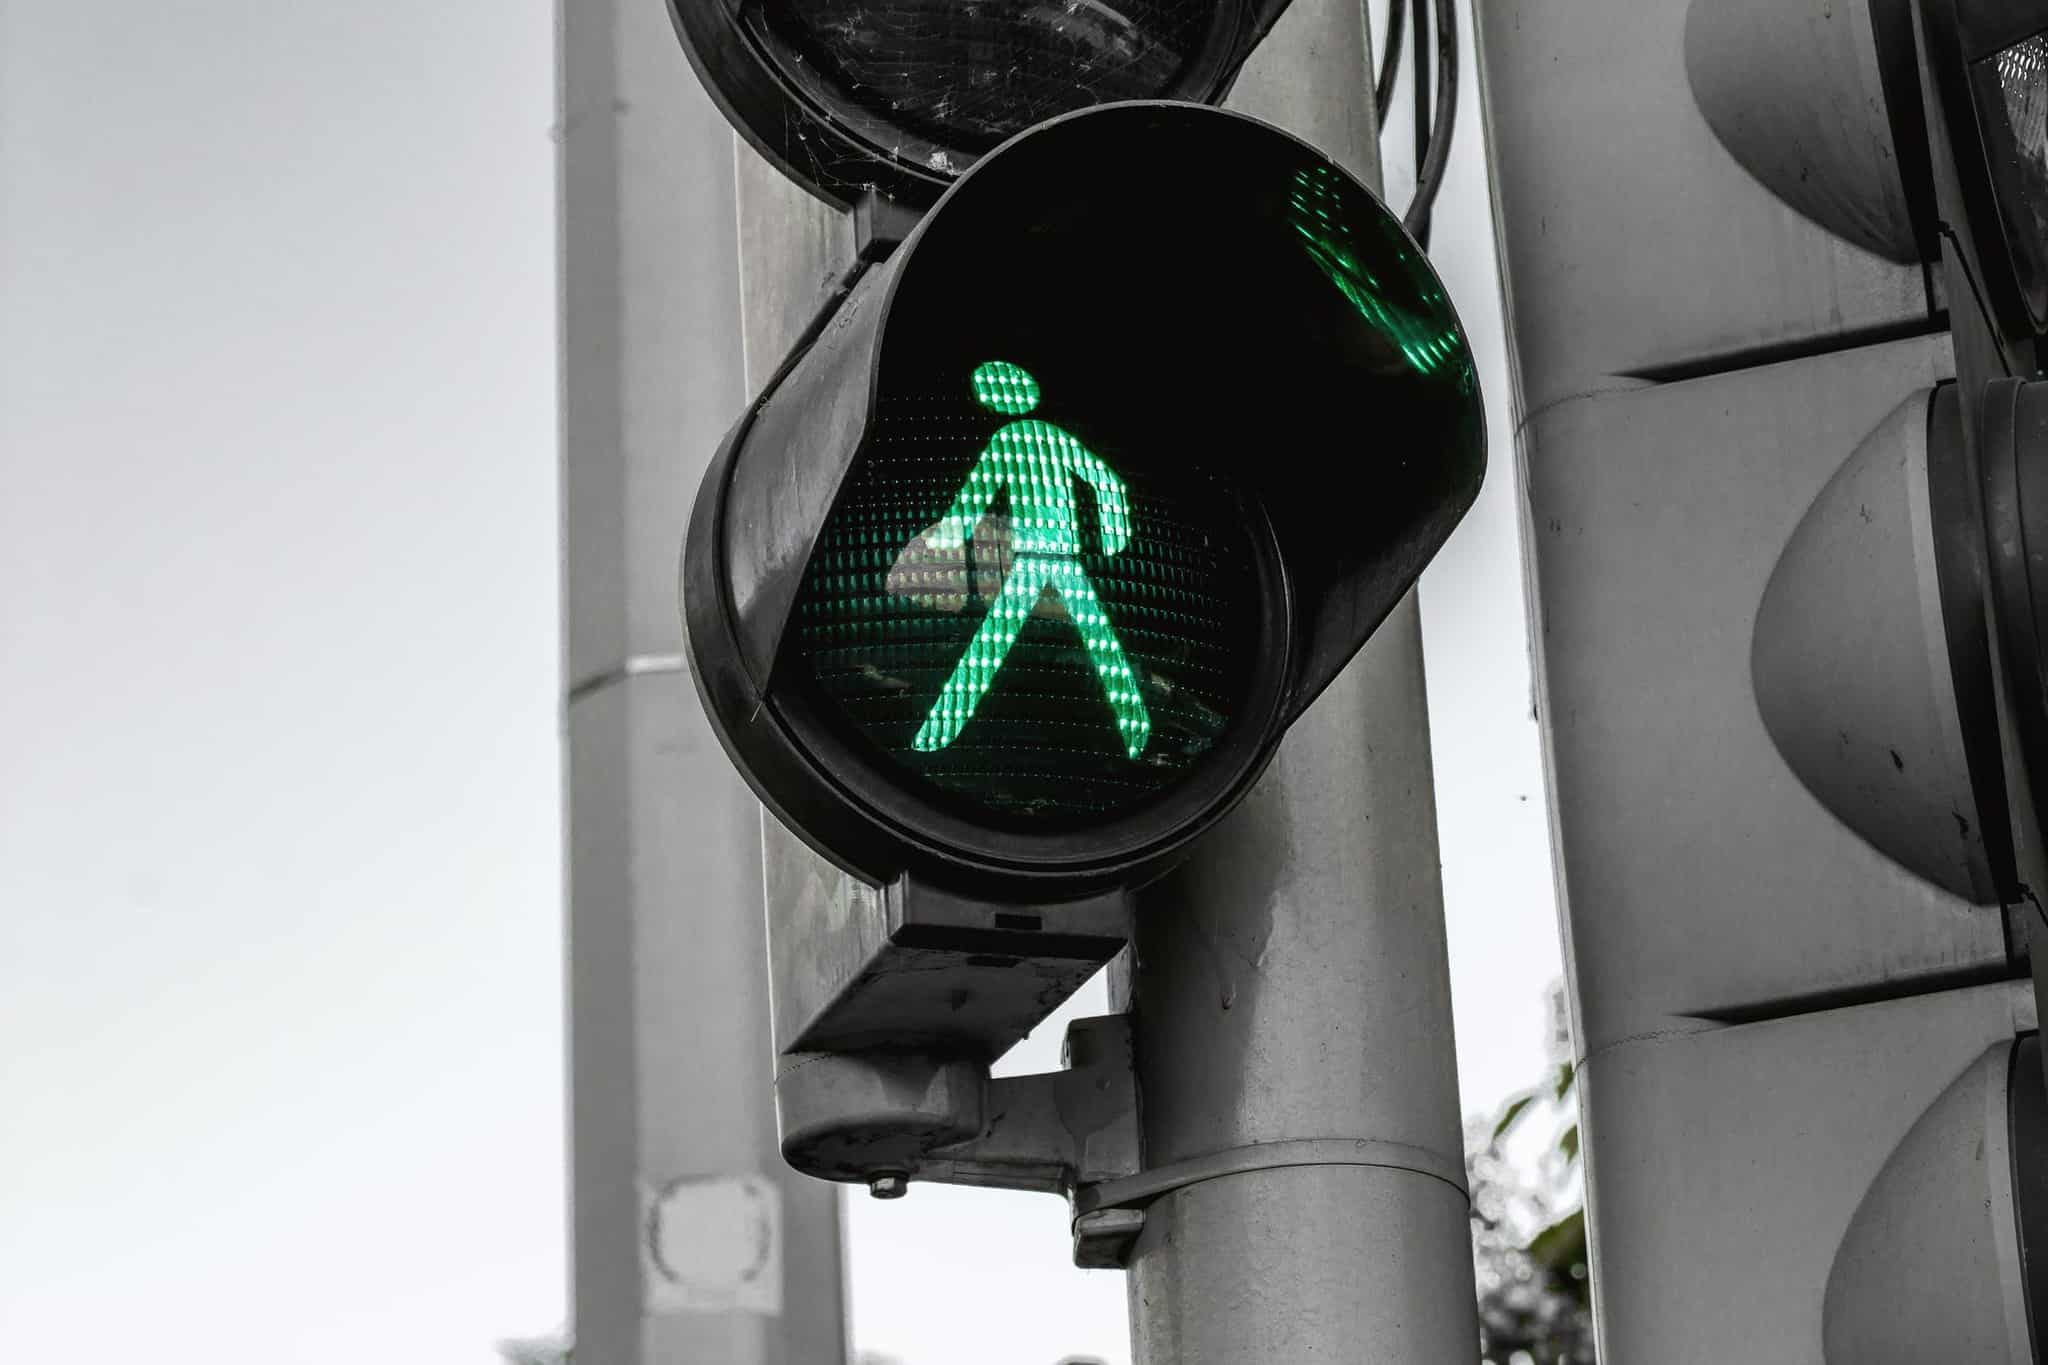 lit up walk symbol for crosswalk